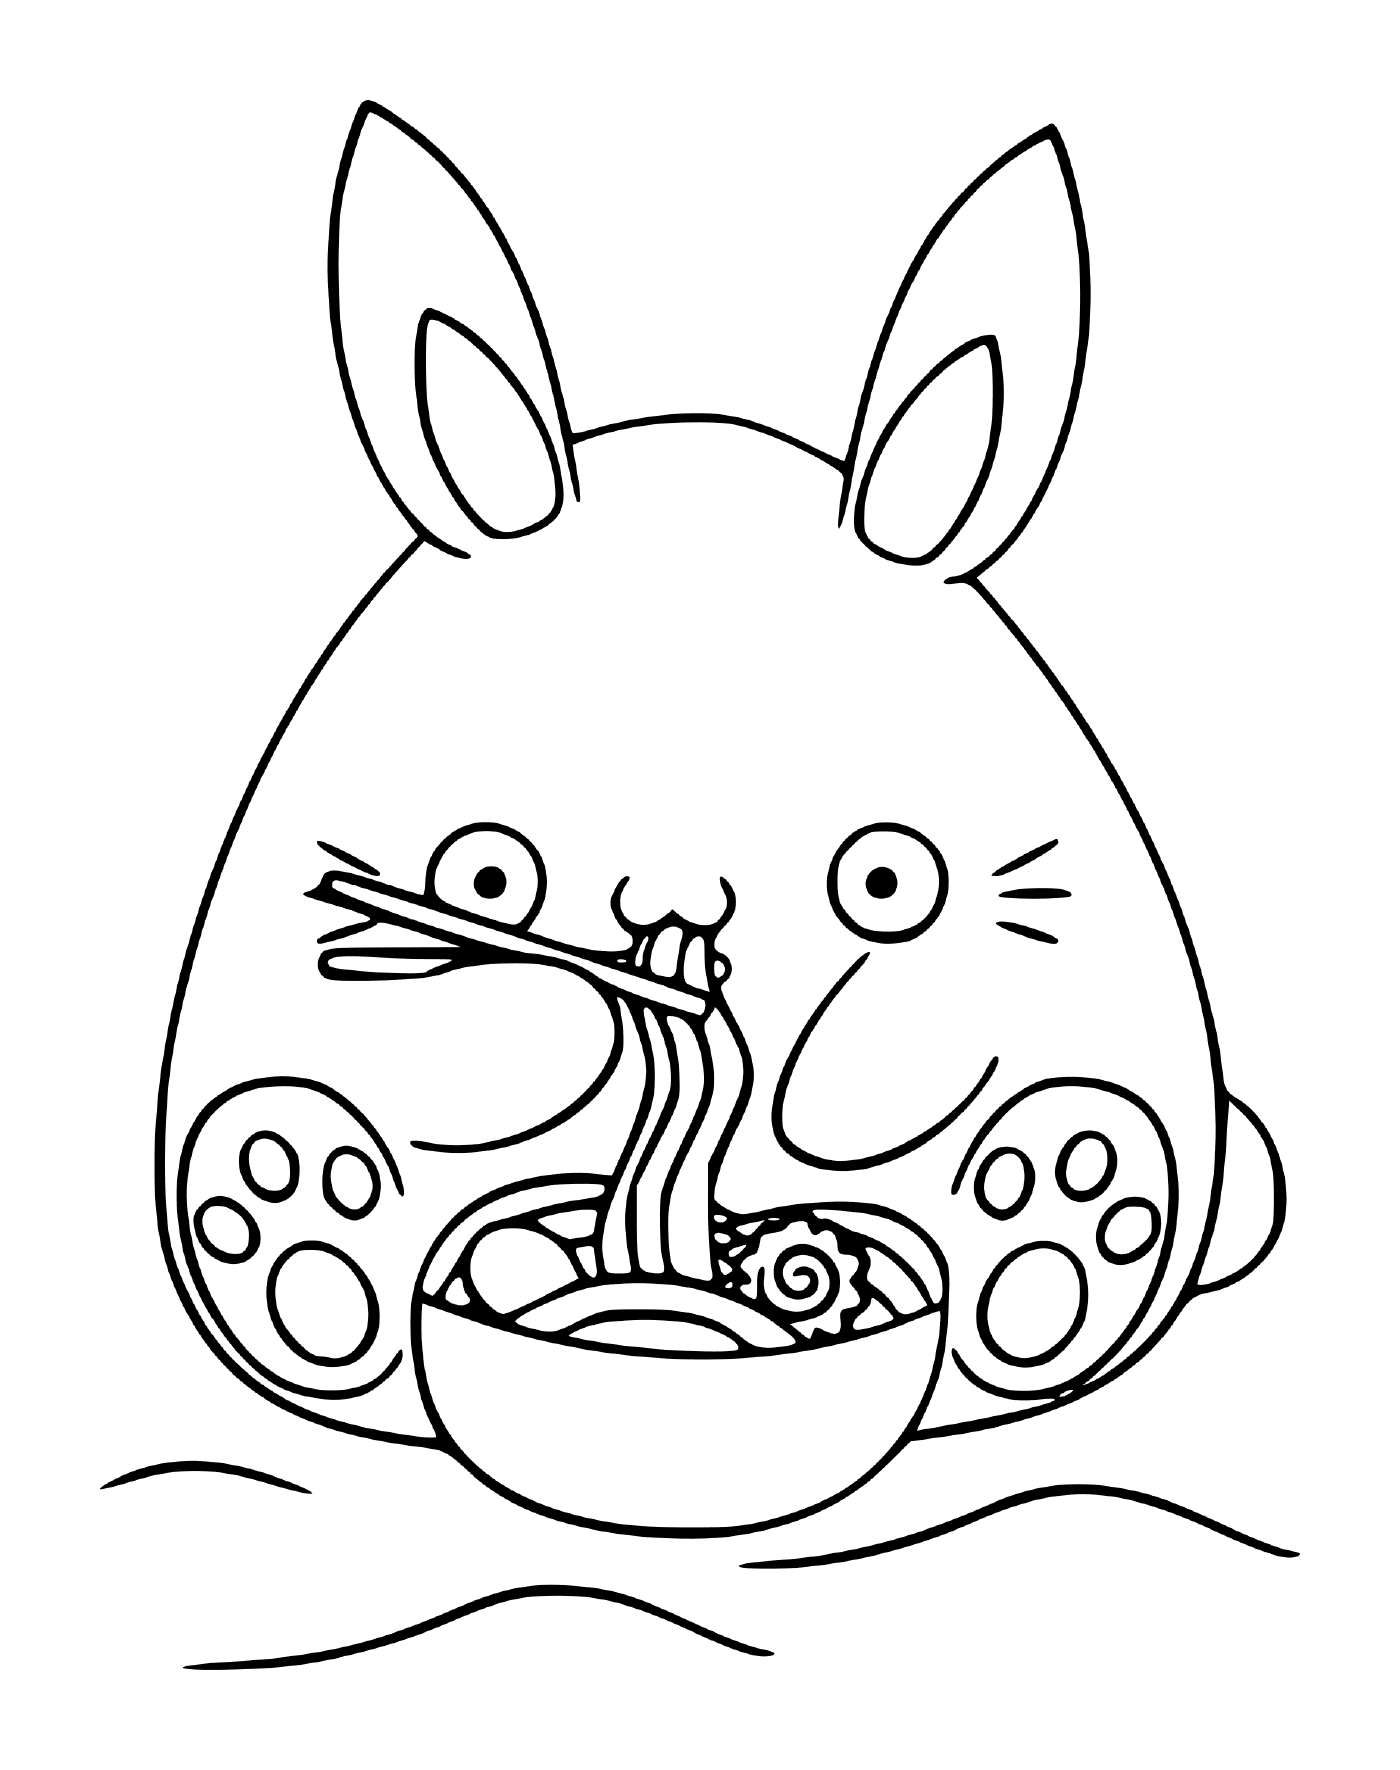  A kawaii rabbit 